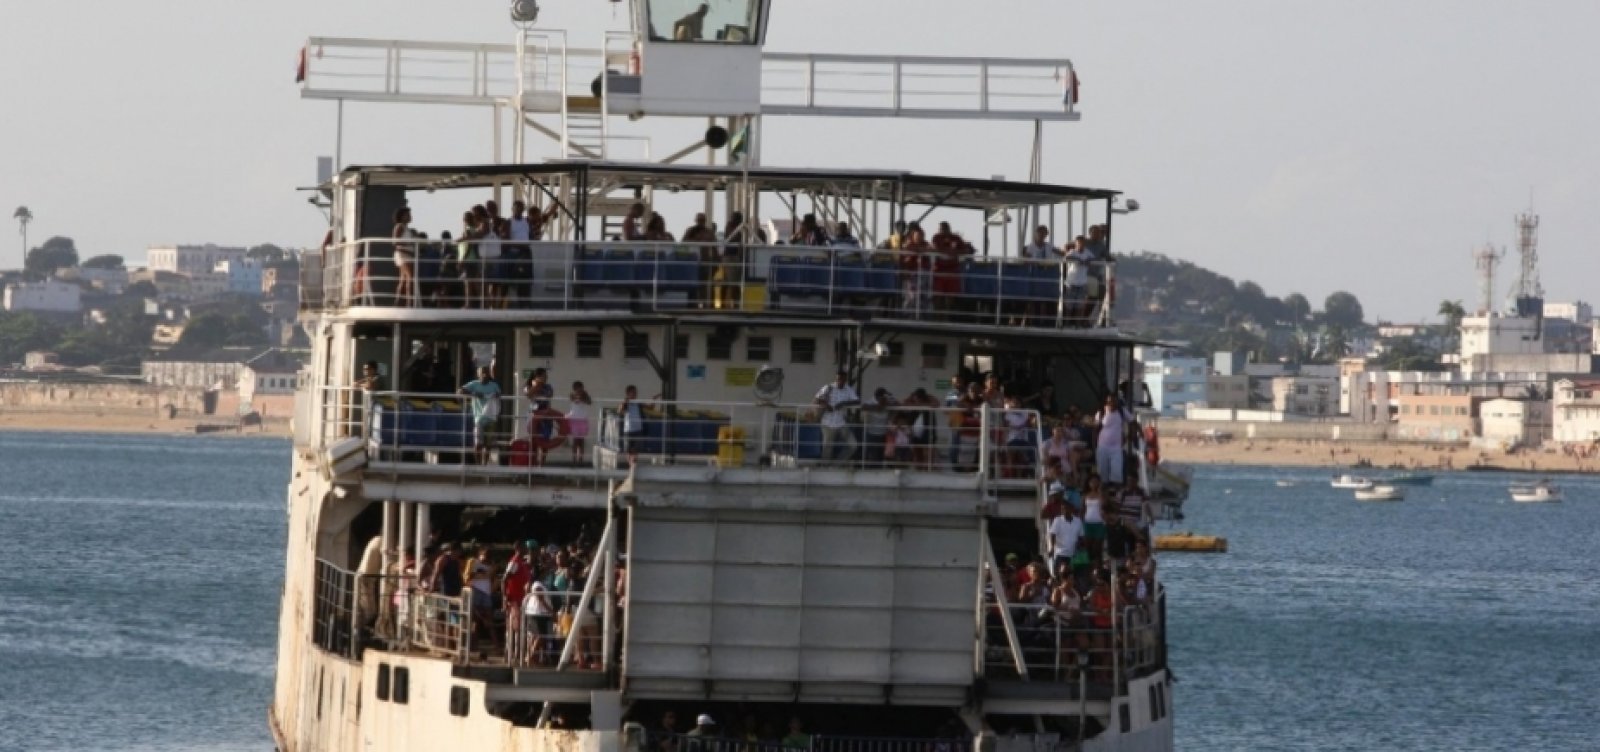 Coronavírus: governo suspende travessias de ferry-boat e lanchas durante 10 dias